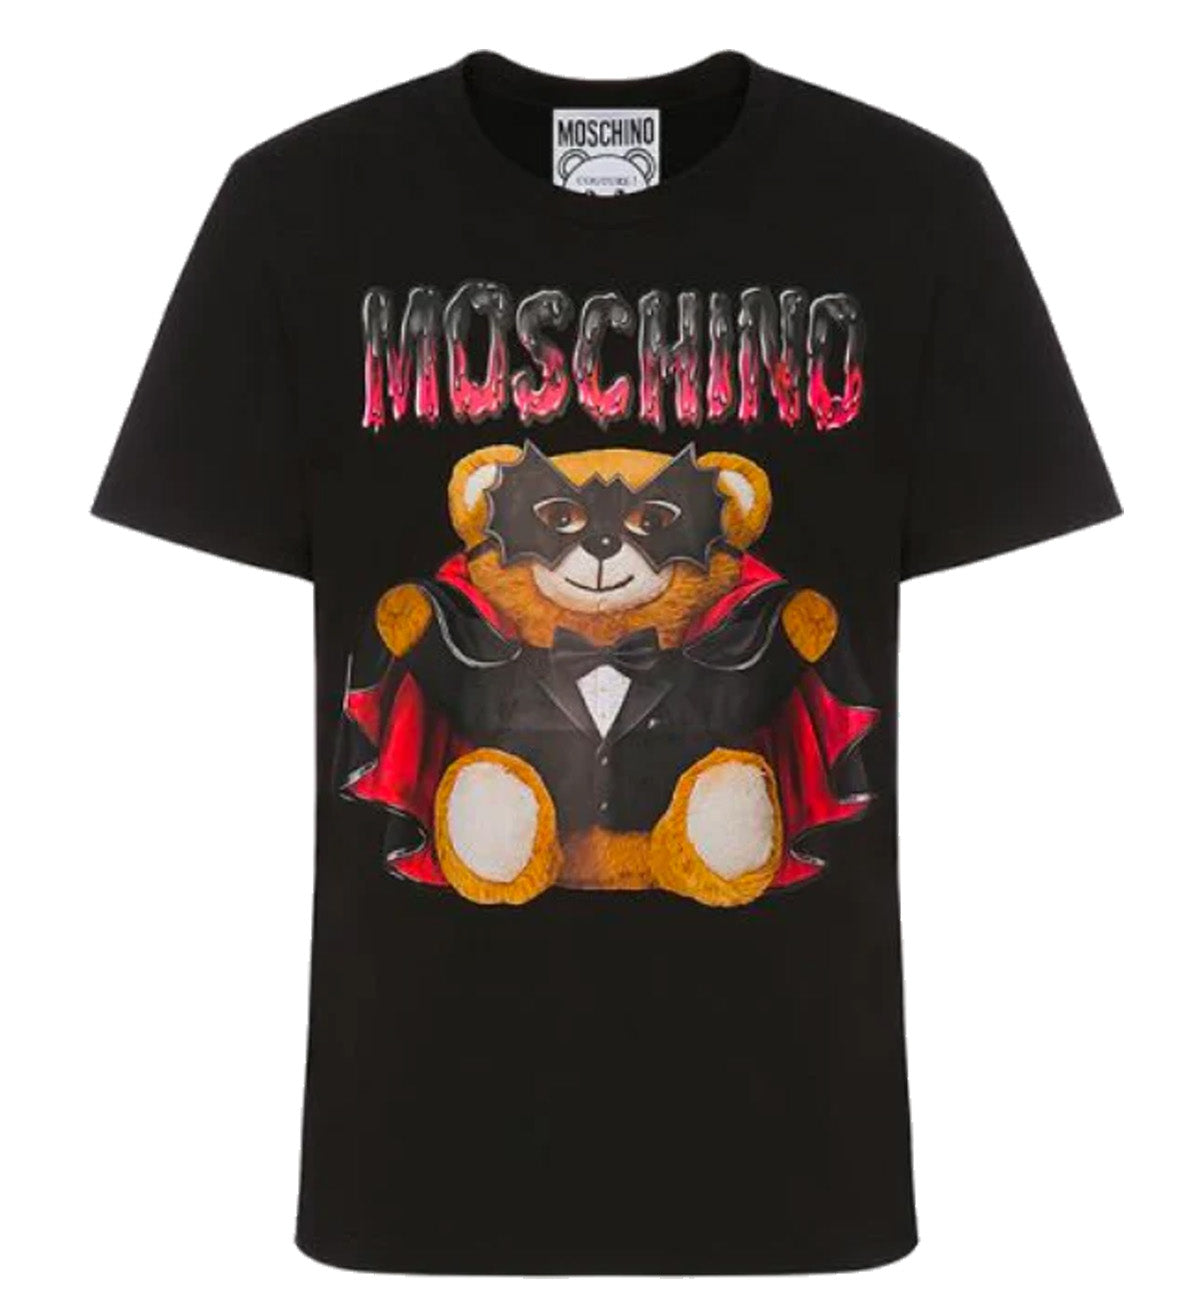 Moschino Black Bat Teddy Bear T-Shirt (Black)